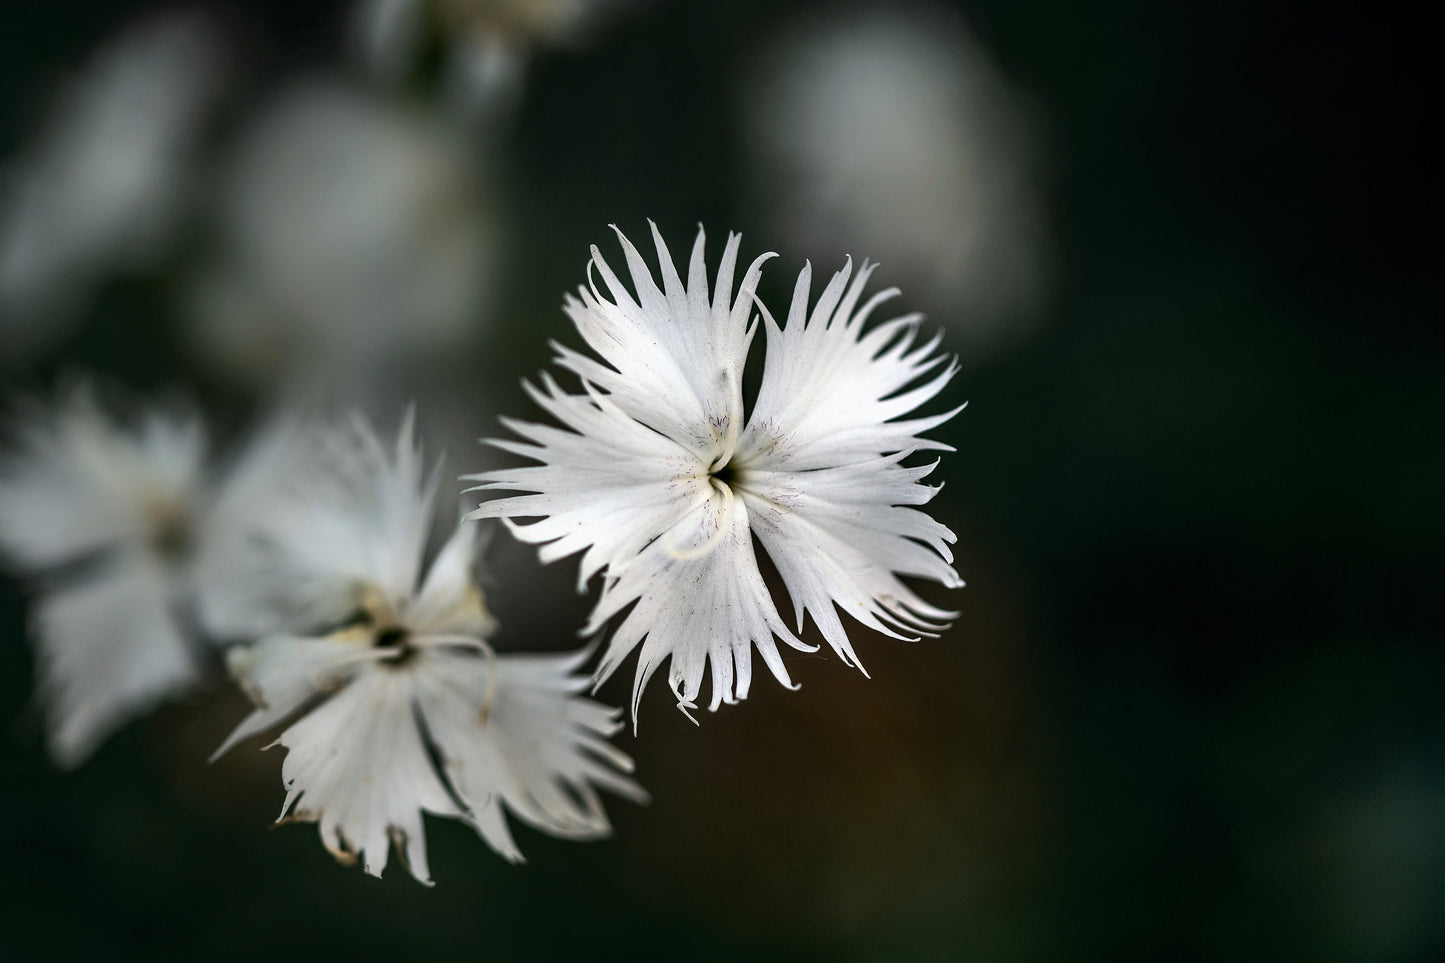 25 Dwarf LITTLE MAIDEN DIANTHUS Arenarius f. Nanus Fragrant White Flower Seeds